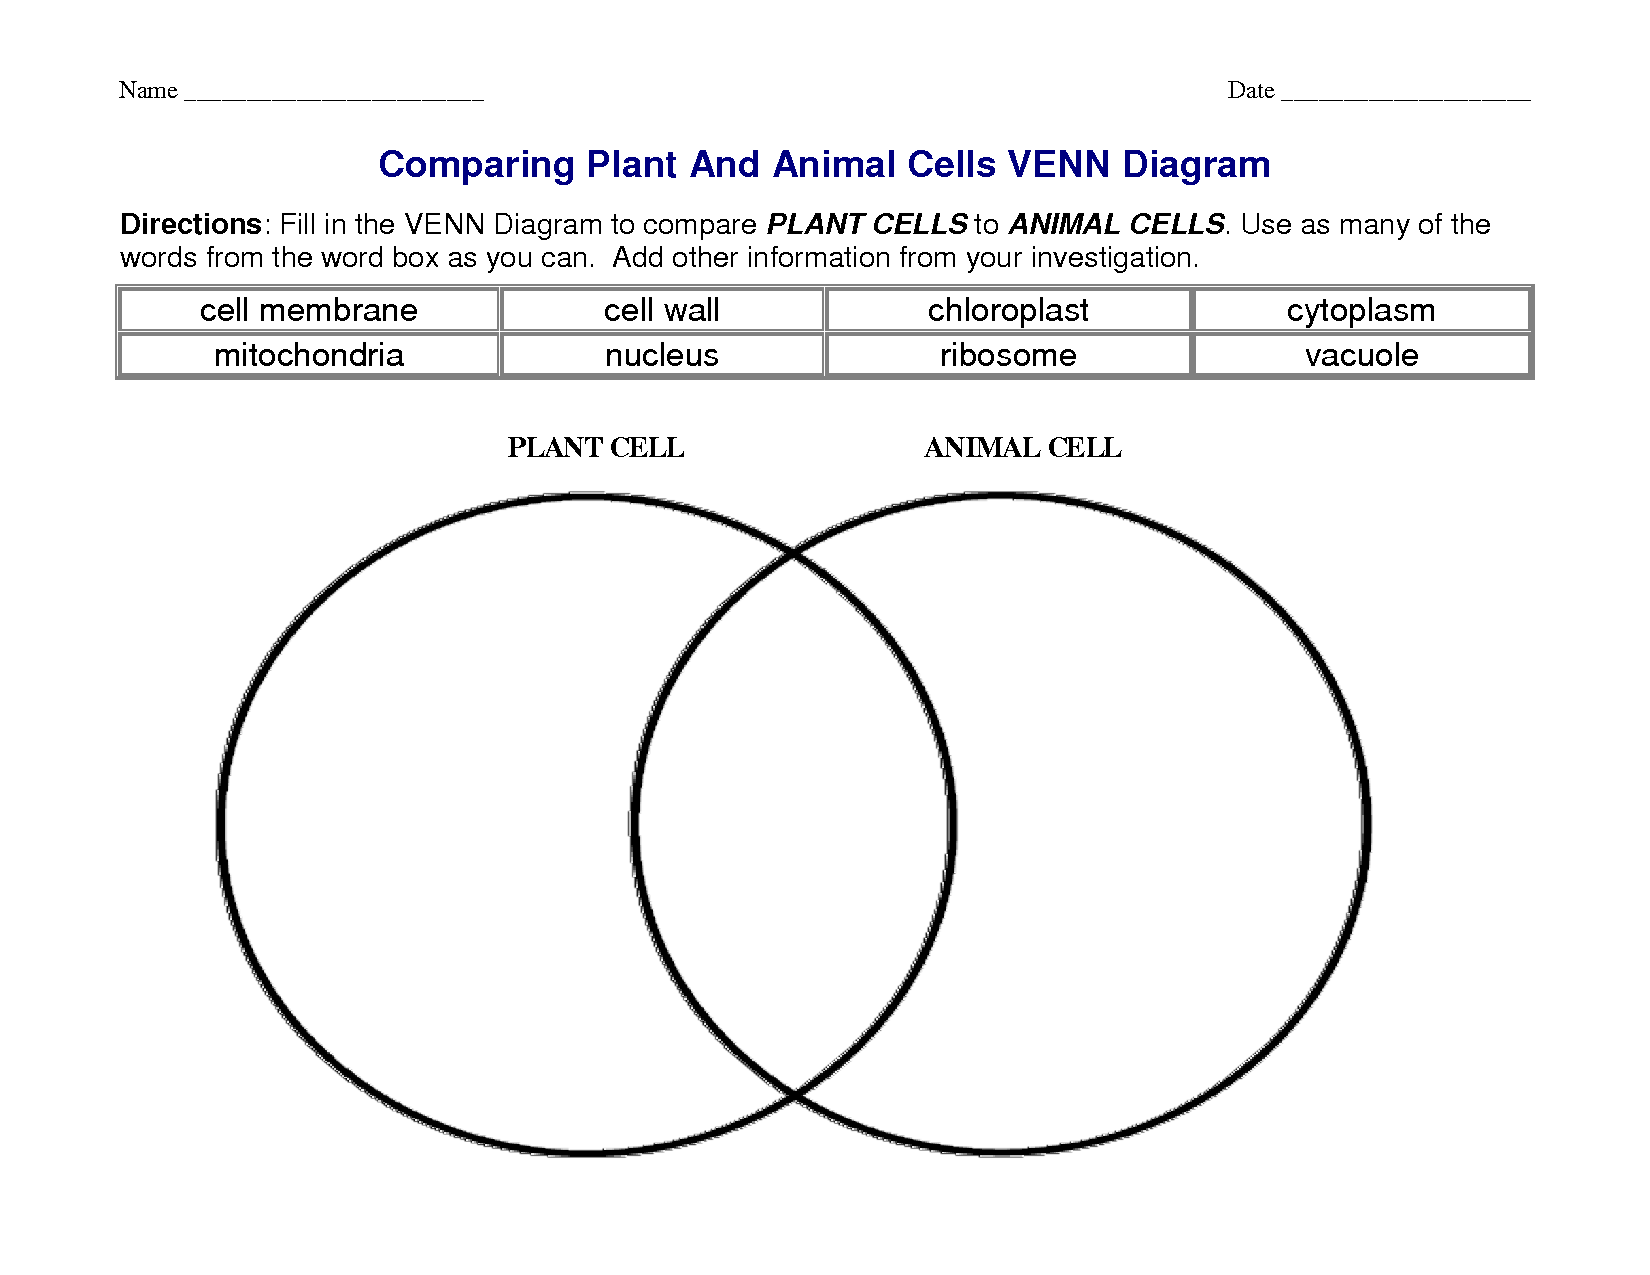 Plant and Animal Cell Venn Diagram Image